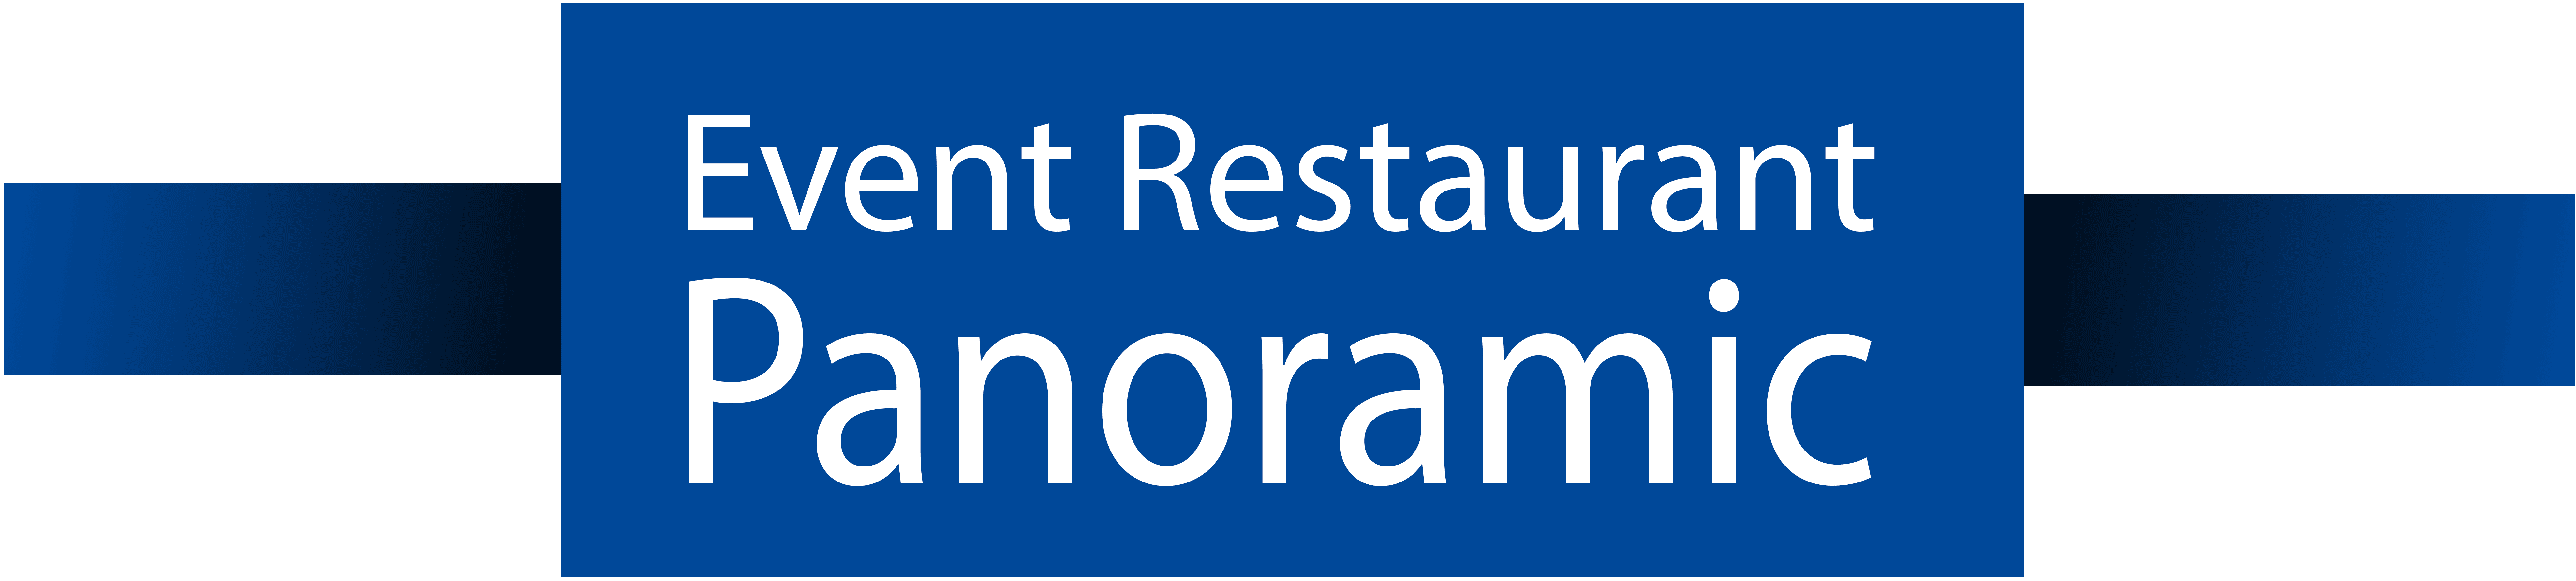 Eventrestaurant-Panoramic in Karlsruhe